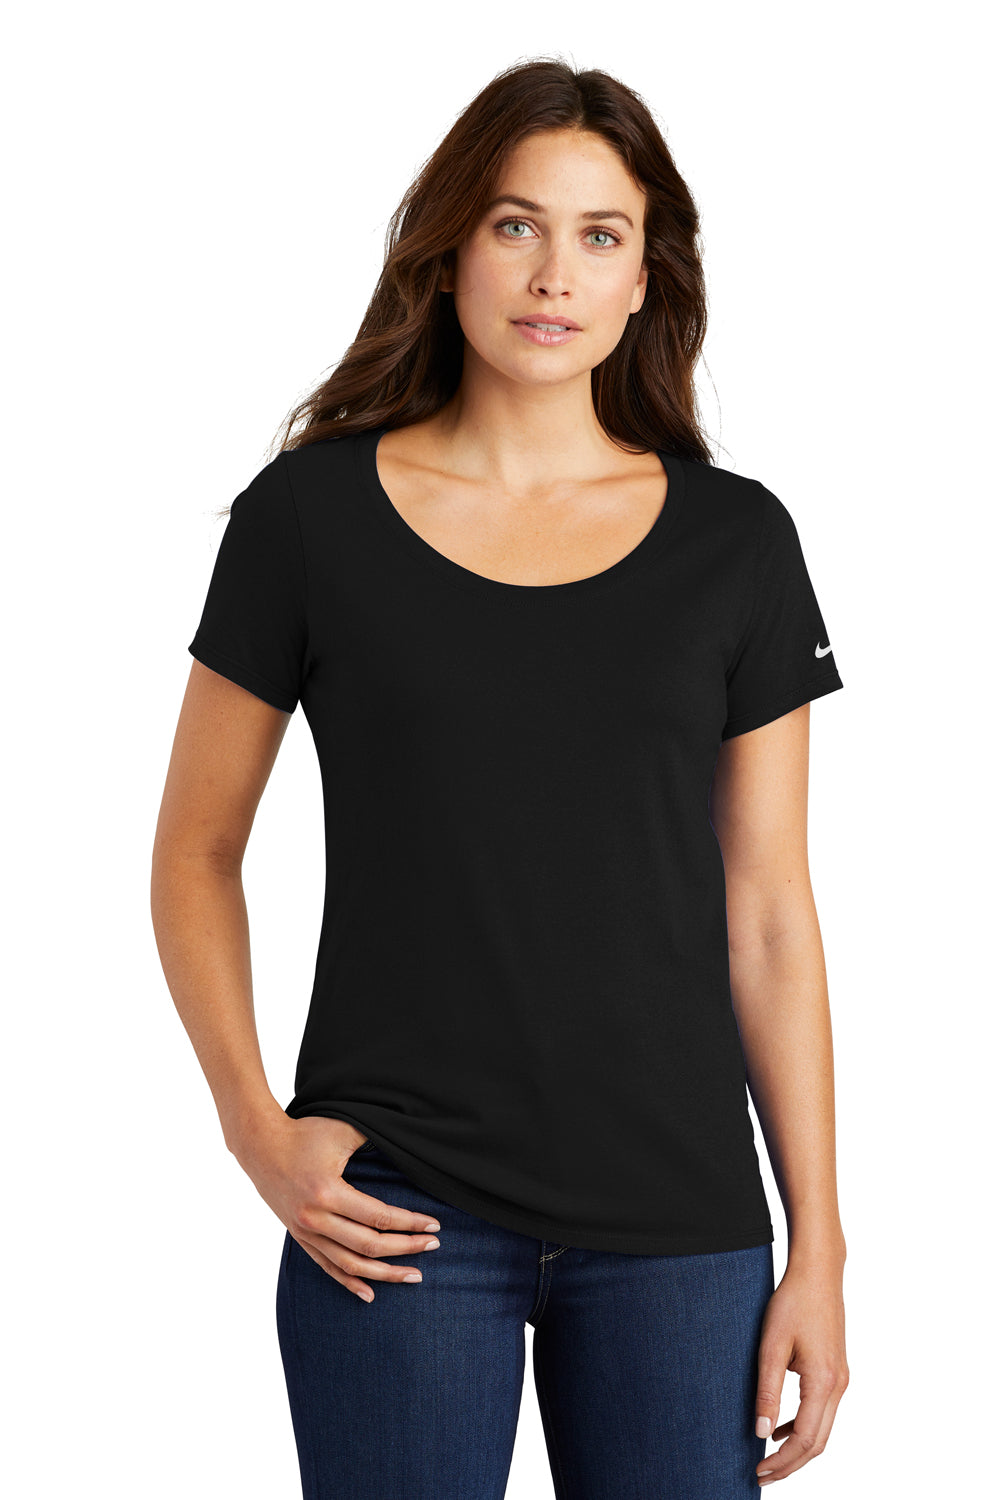 Nike NKBQ5236 Womens Core Short Sleeve Scoop Neck T-Shirt Black Front